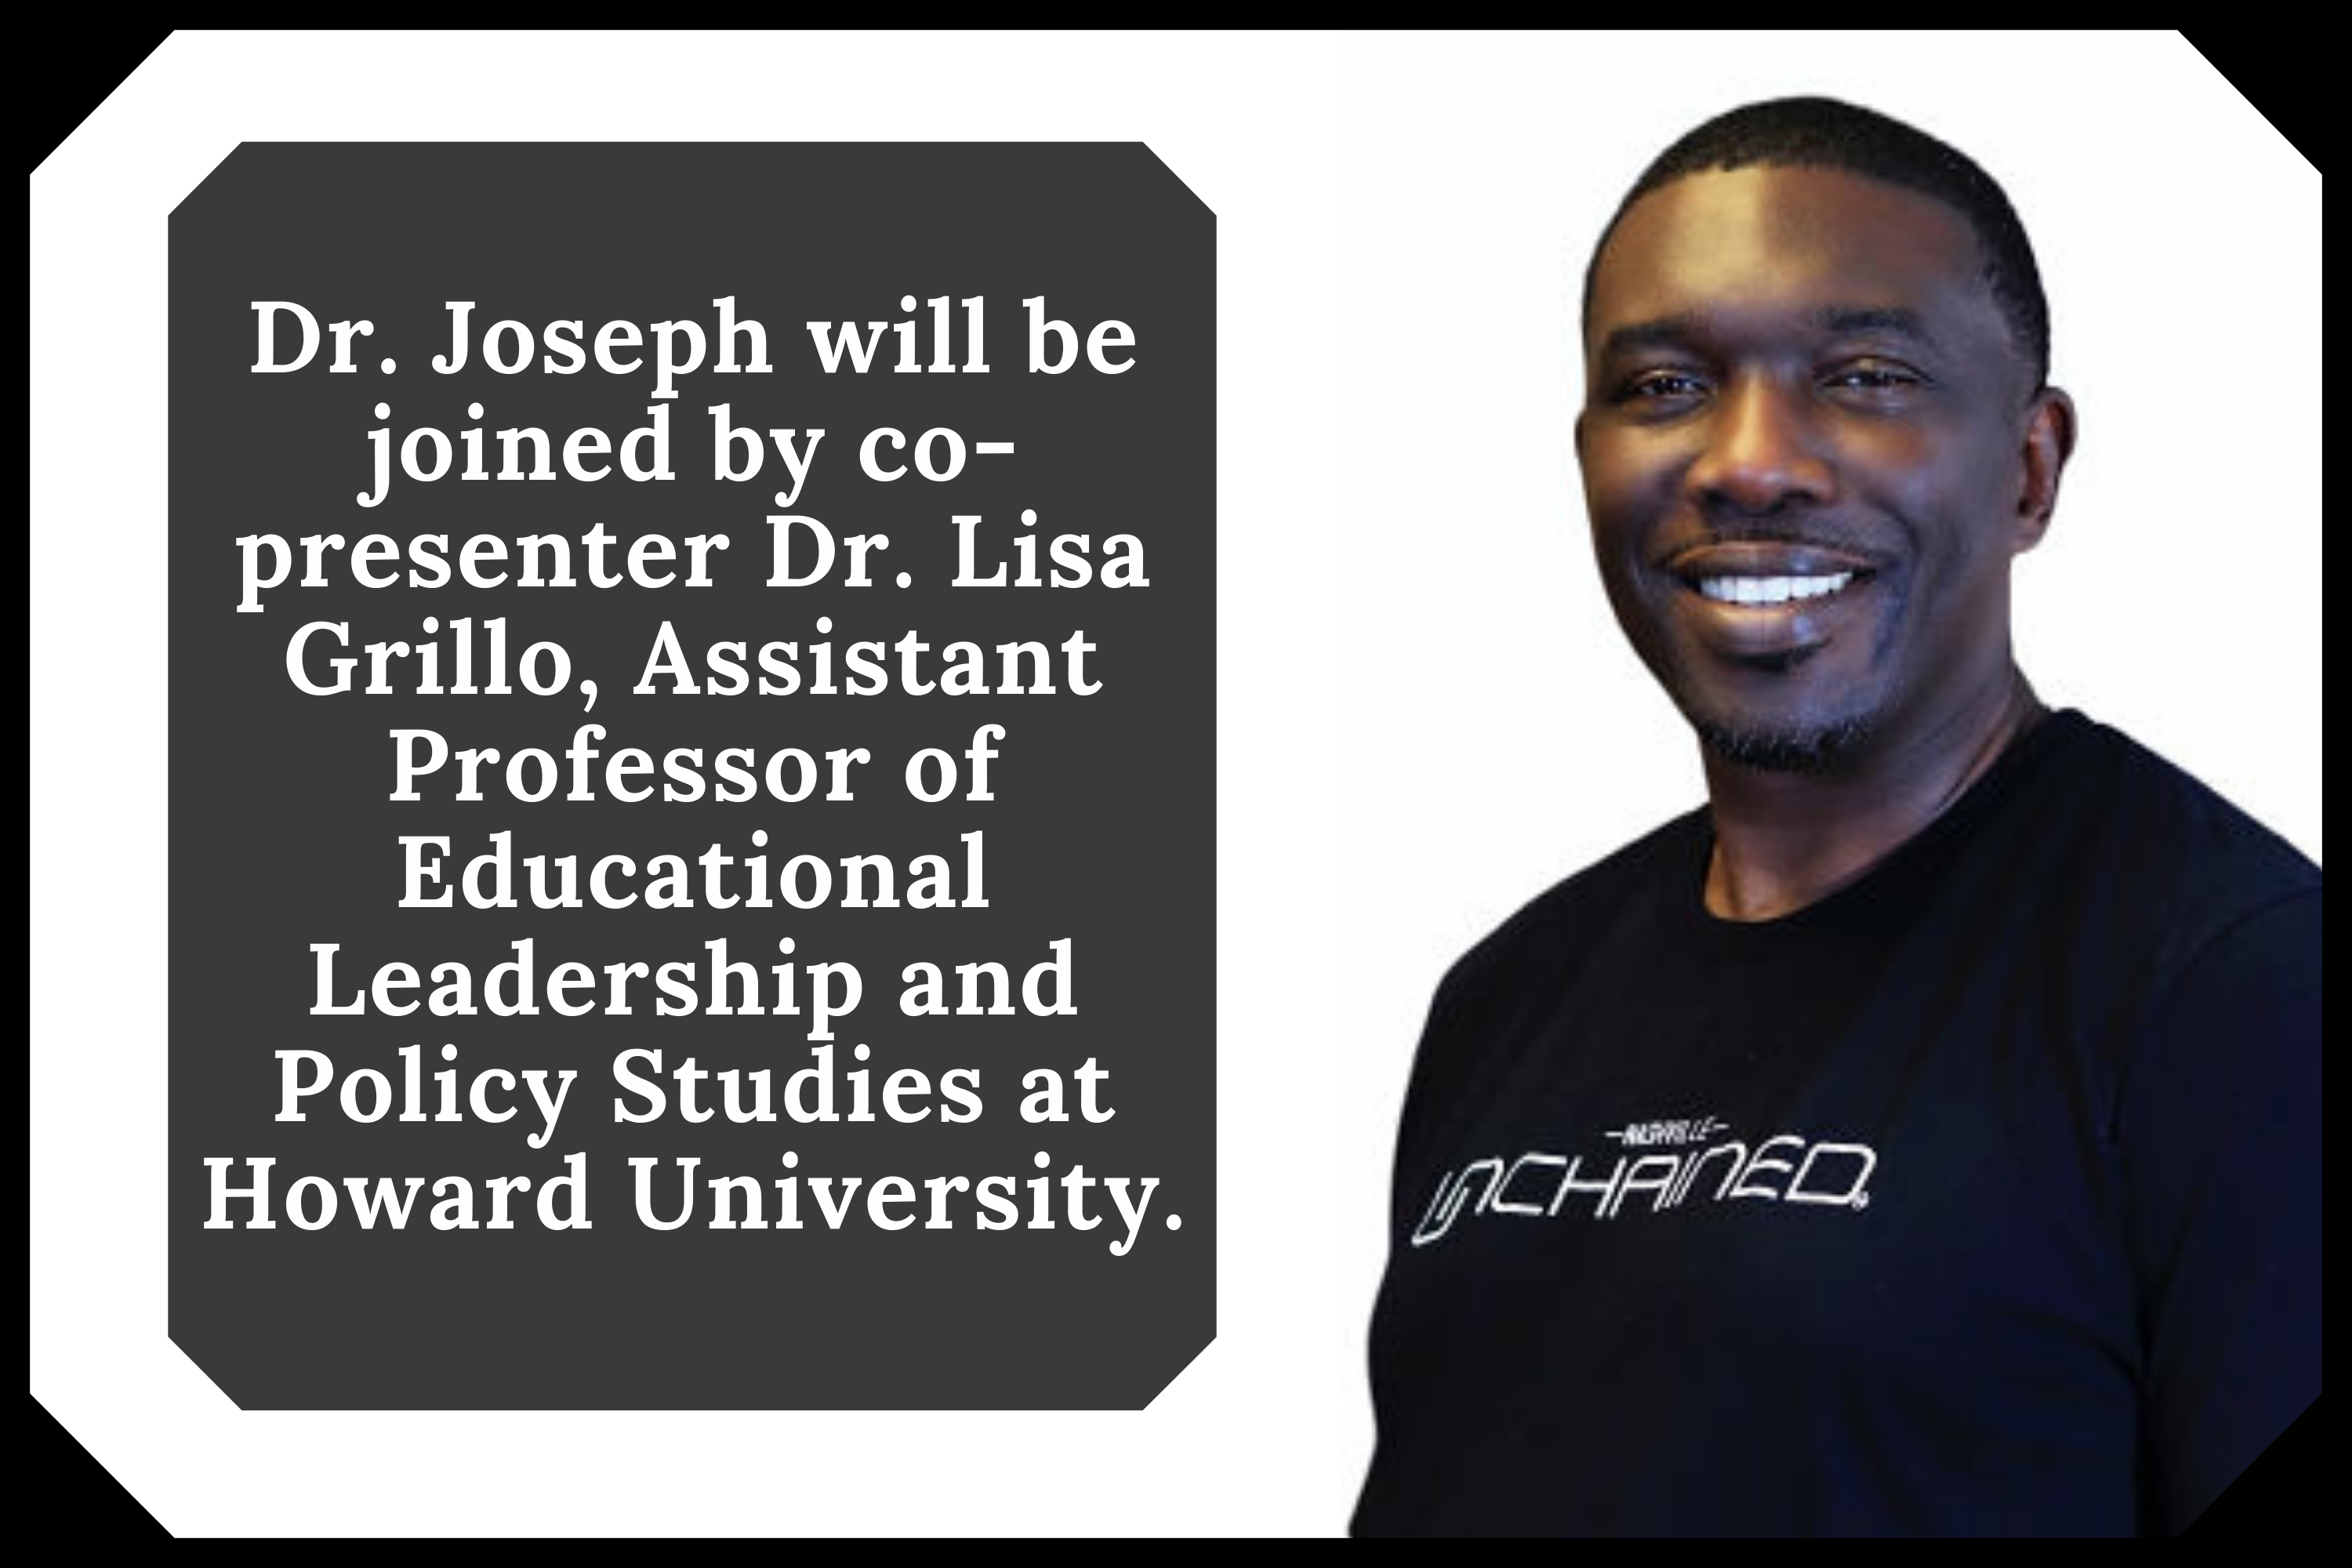 Dr. Shawn Joseph, Monday, February 1, 2021, Press release picture